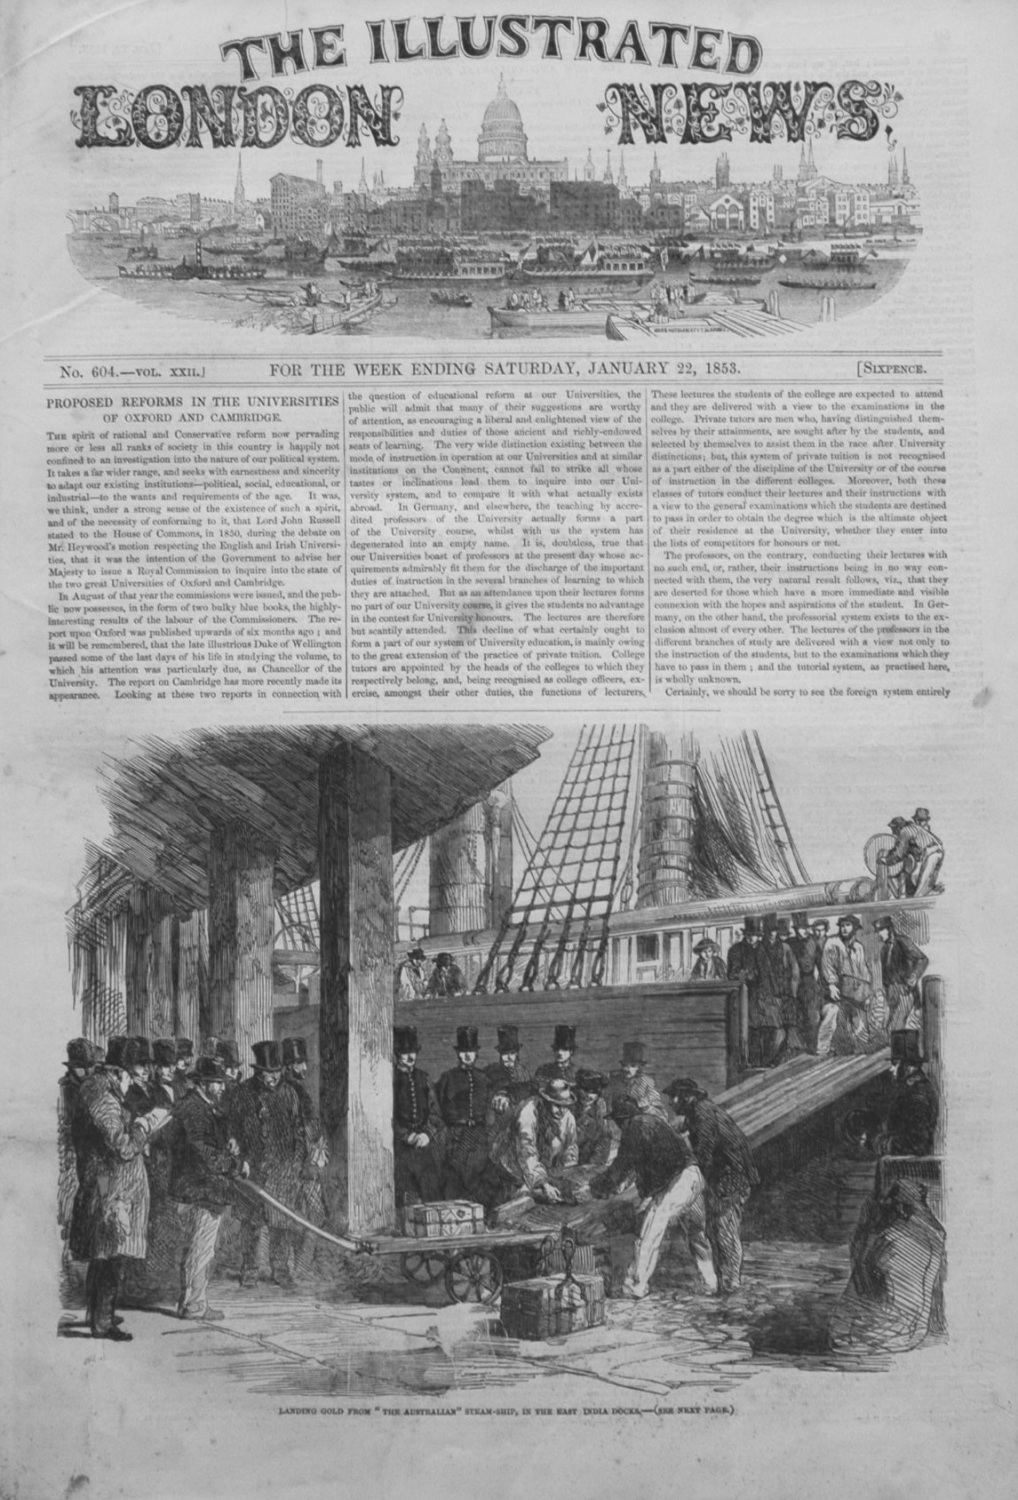 Illustrated London News January 22nd 1853.